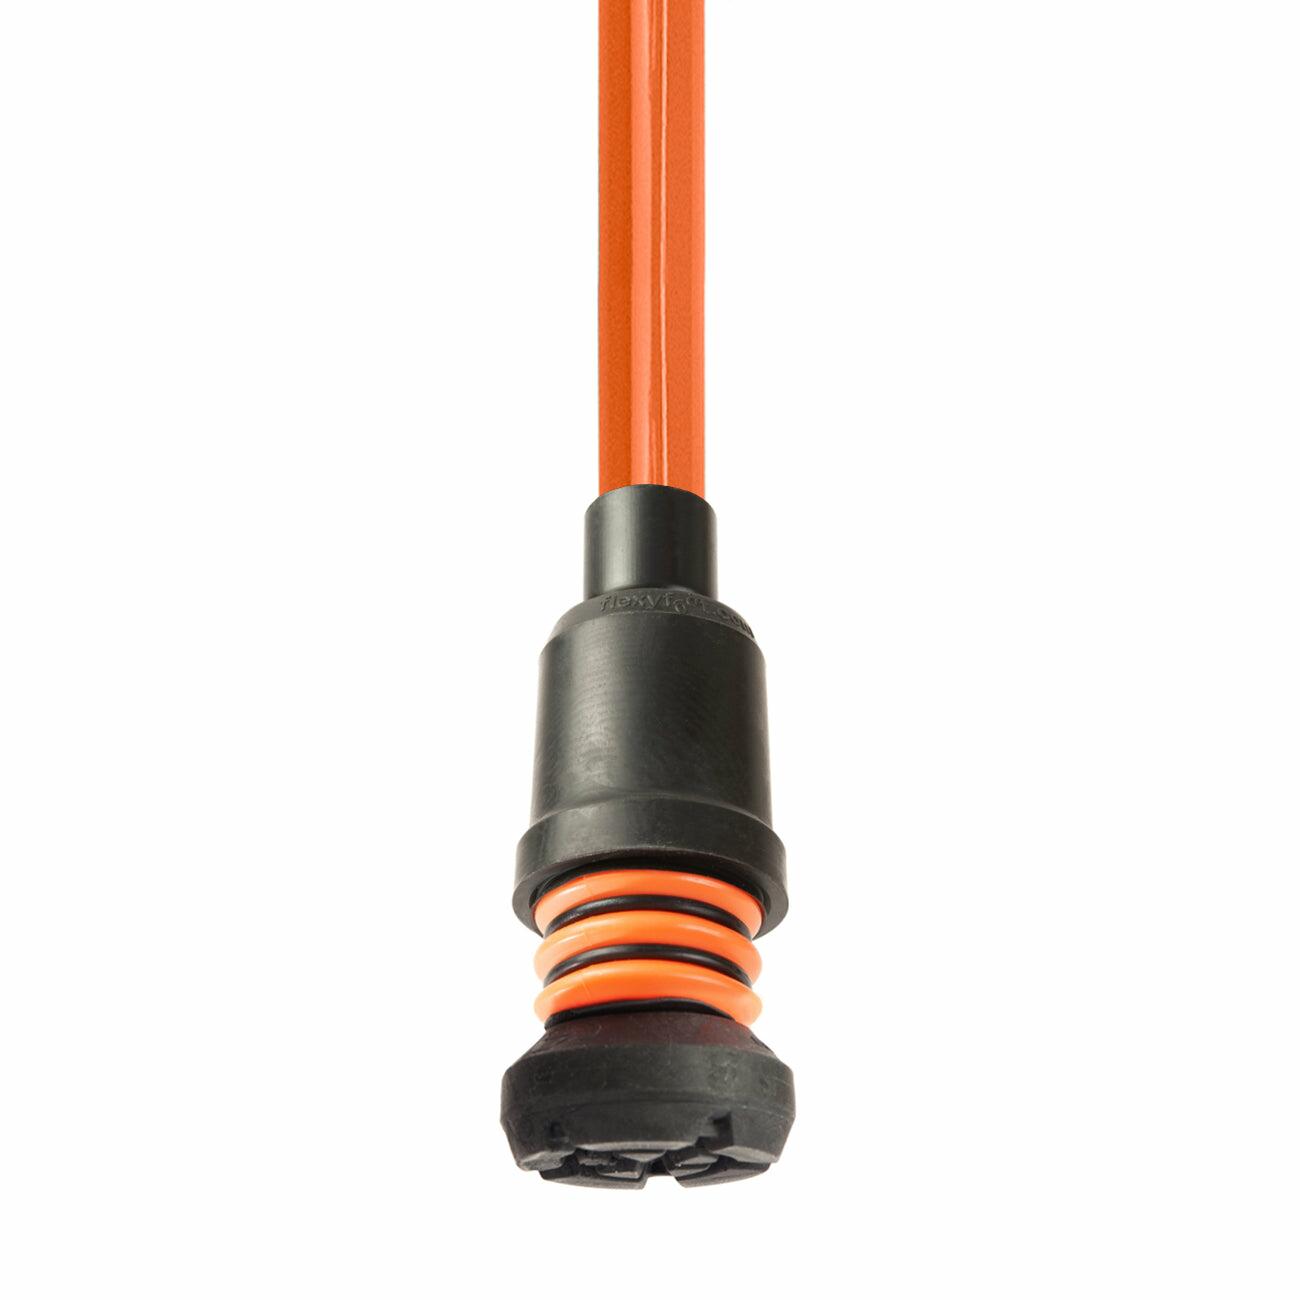 An orange Flexyfoot Comfort Grip Open Cuff Crutch tipped with a Flexyfoot ferrule